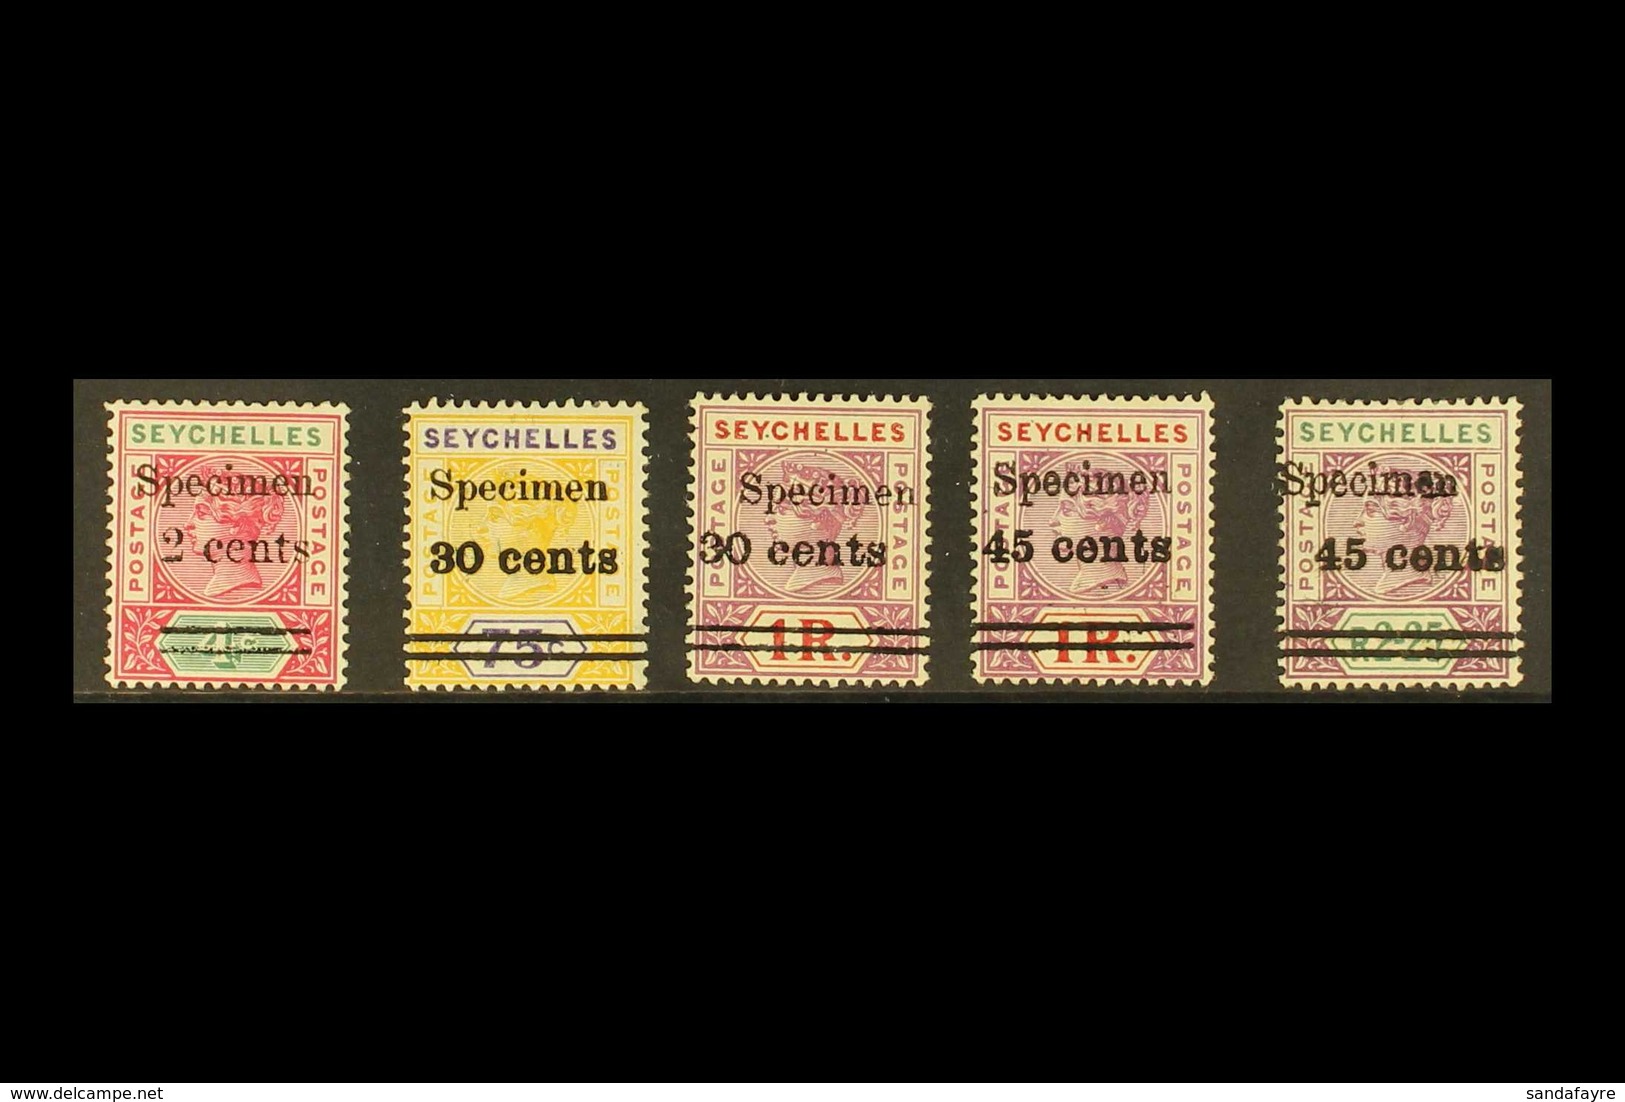 1902 Surcharges Set Overprinted "SPECIMEN", SG 41/45s, Fine Mint. (5 Stamps) For More Images, Please Visit Http://www.sa - Seychelles (...-1976)